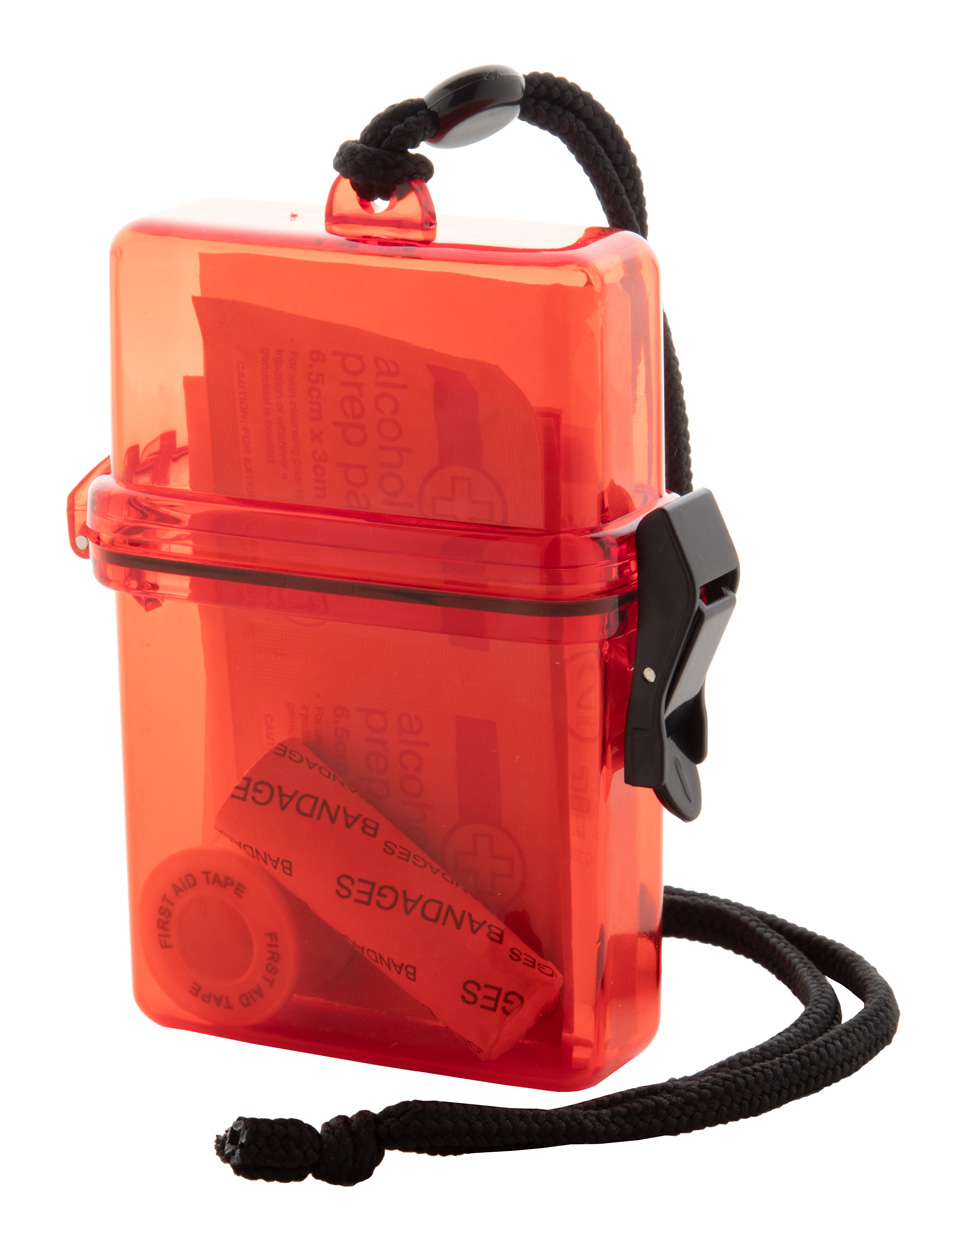 Plastic waterproof first aid kit NEPTUNE - red